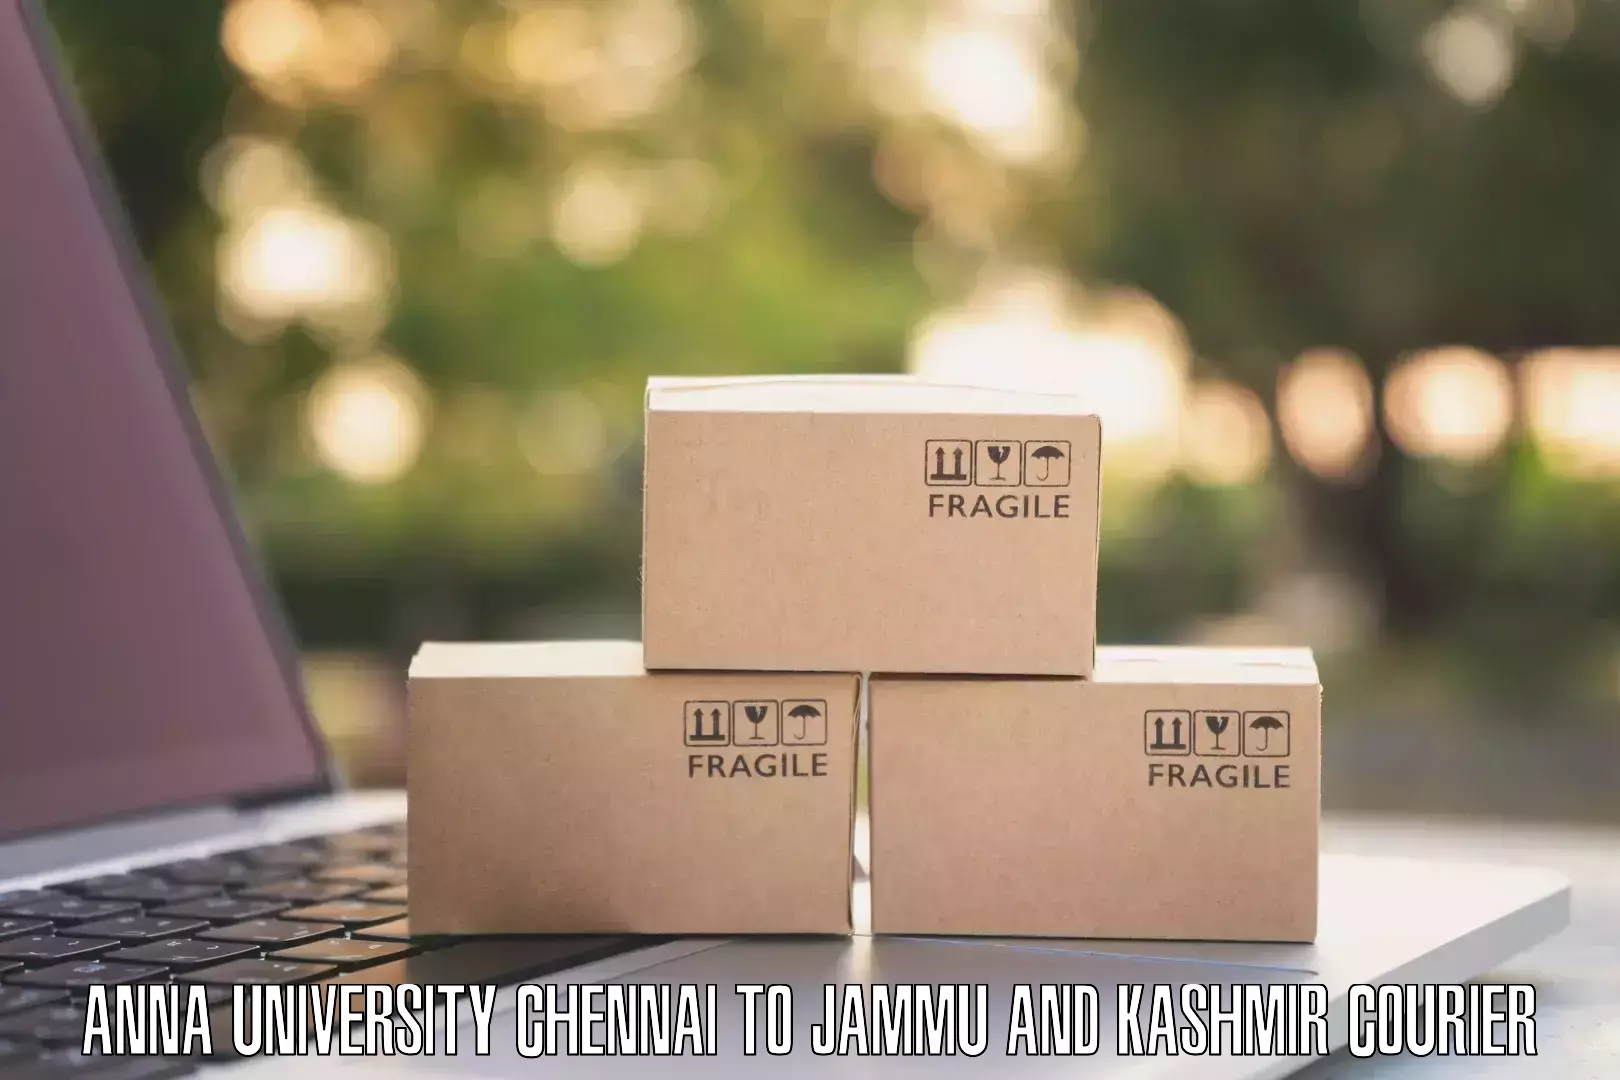 Courier service innovation Anna University Chennai to Jammu and Kashmir